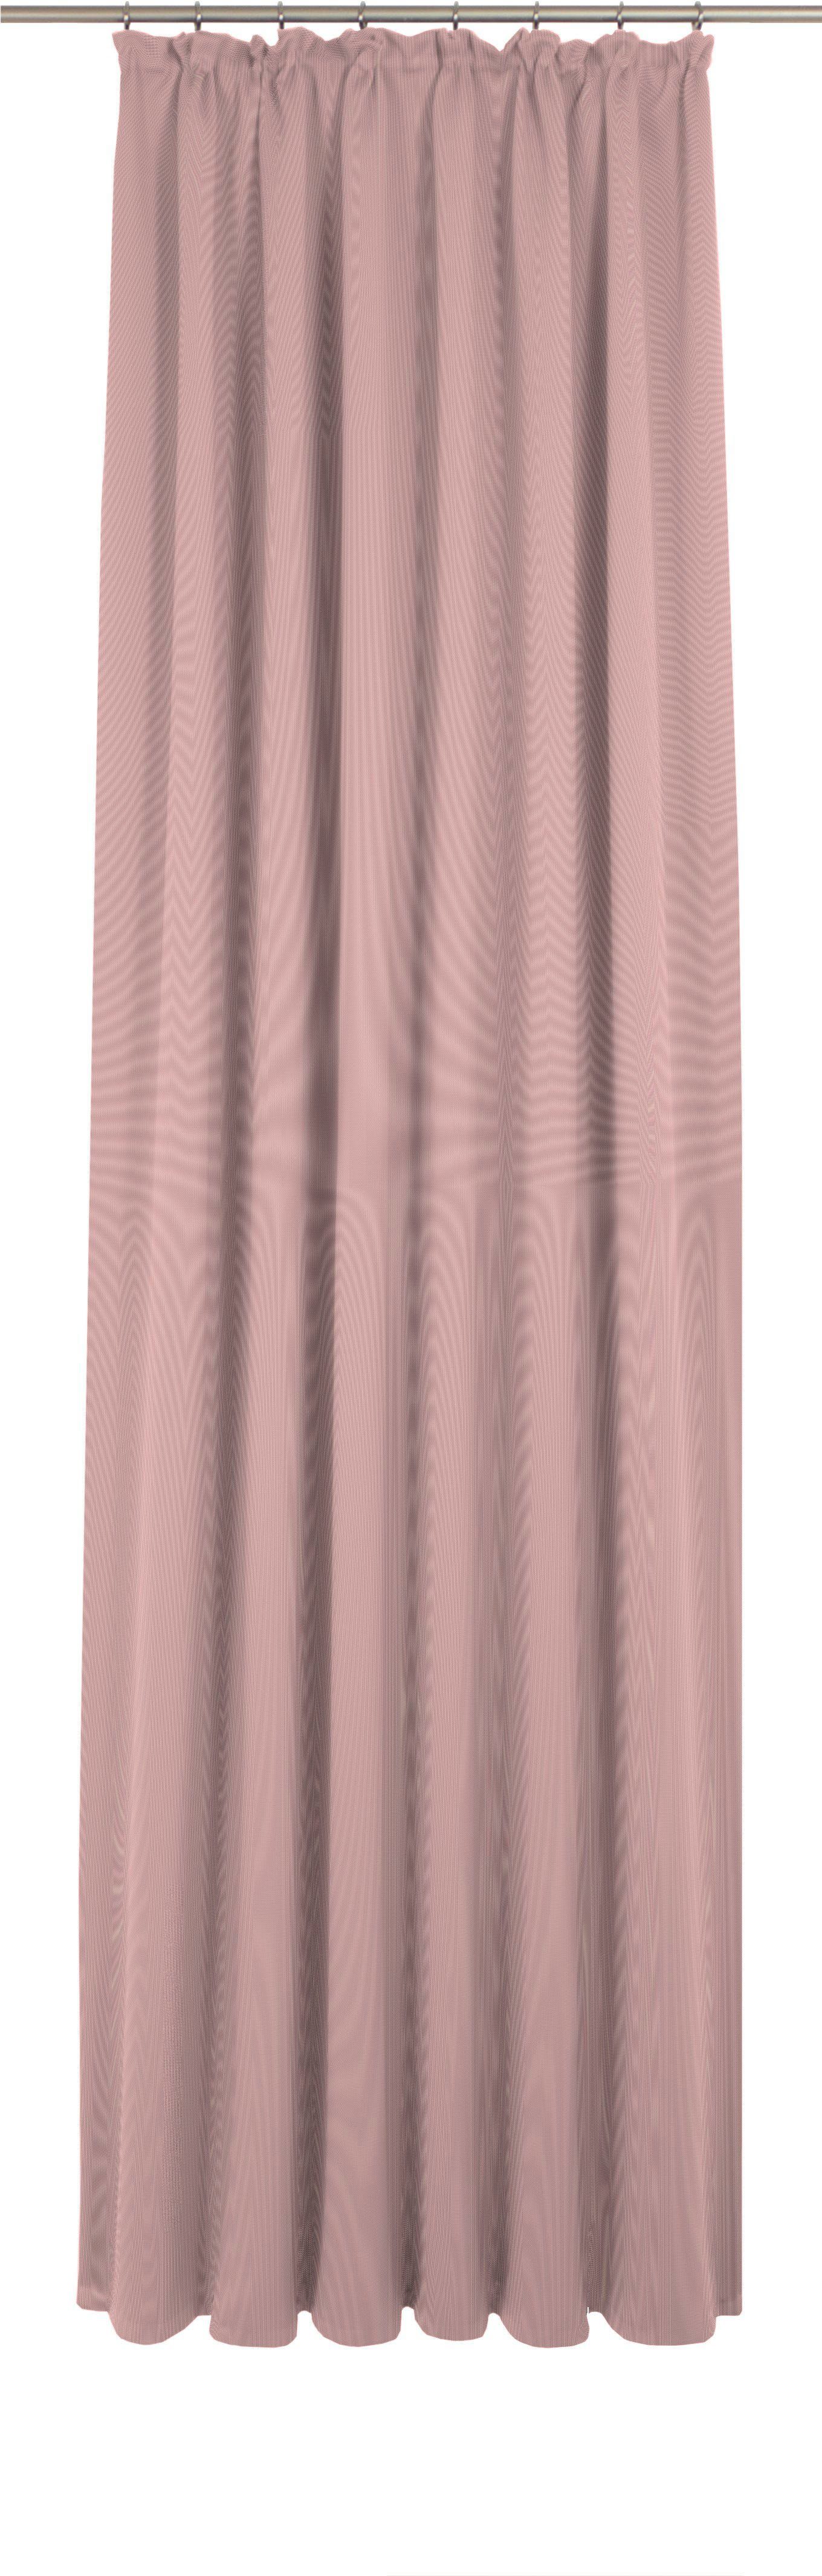 Vorhang Uni Collection, Adam, Kräuselband Jacquard, rosa St), blickdicht, nachhaltig (1